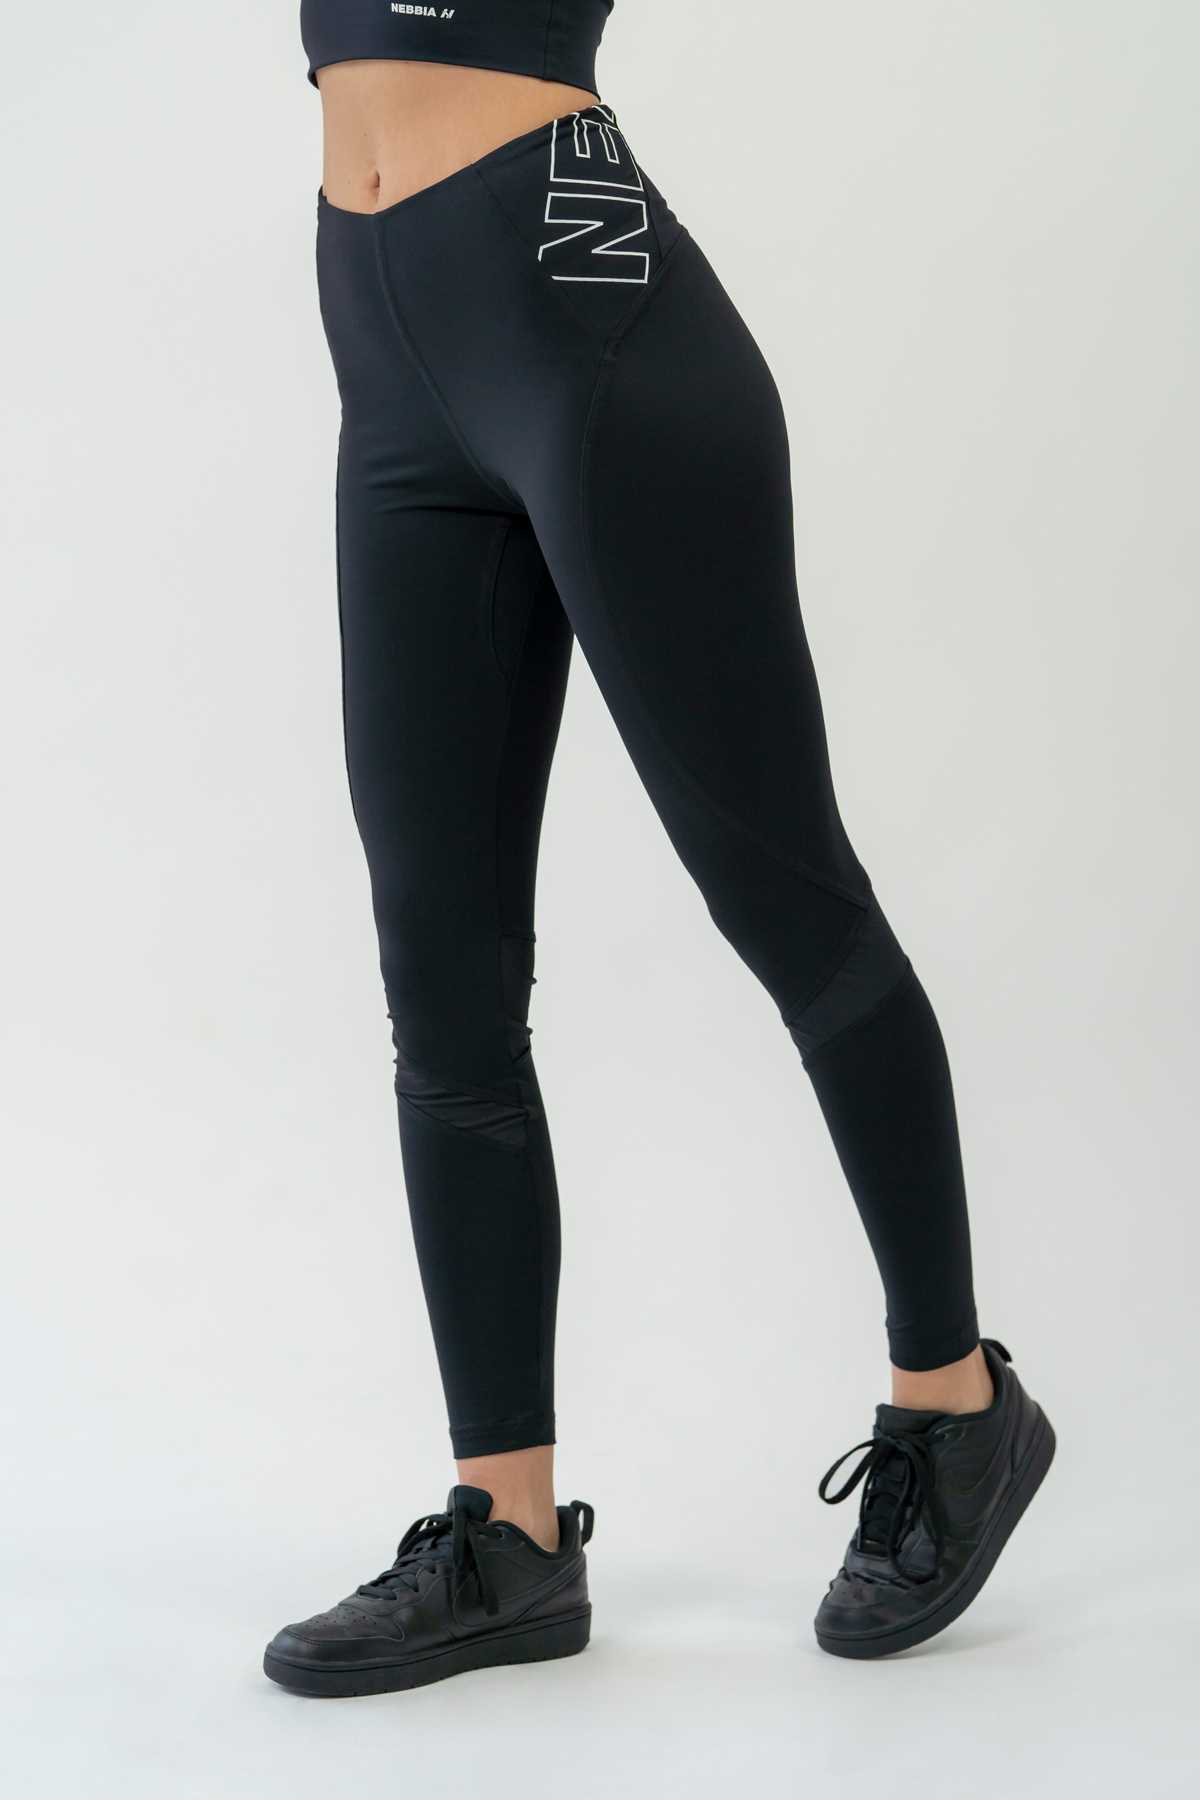 https://irynashop.com/img/upload/GUID/optimized/nebbia-nebbia-fit-activewear-high-waist-leggings-black-legginsy-site--irynashop.com-2048-da69fd60c48a783b9e24a5ecb65fa5bc.jpg